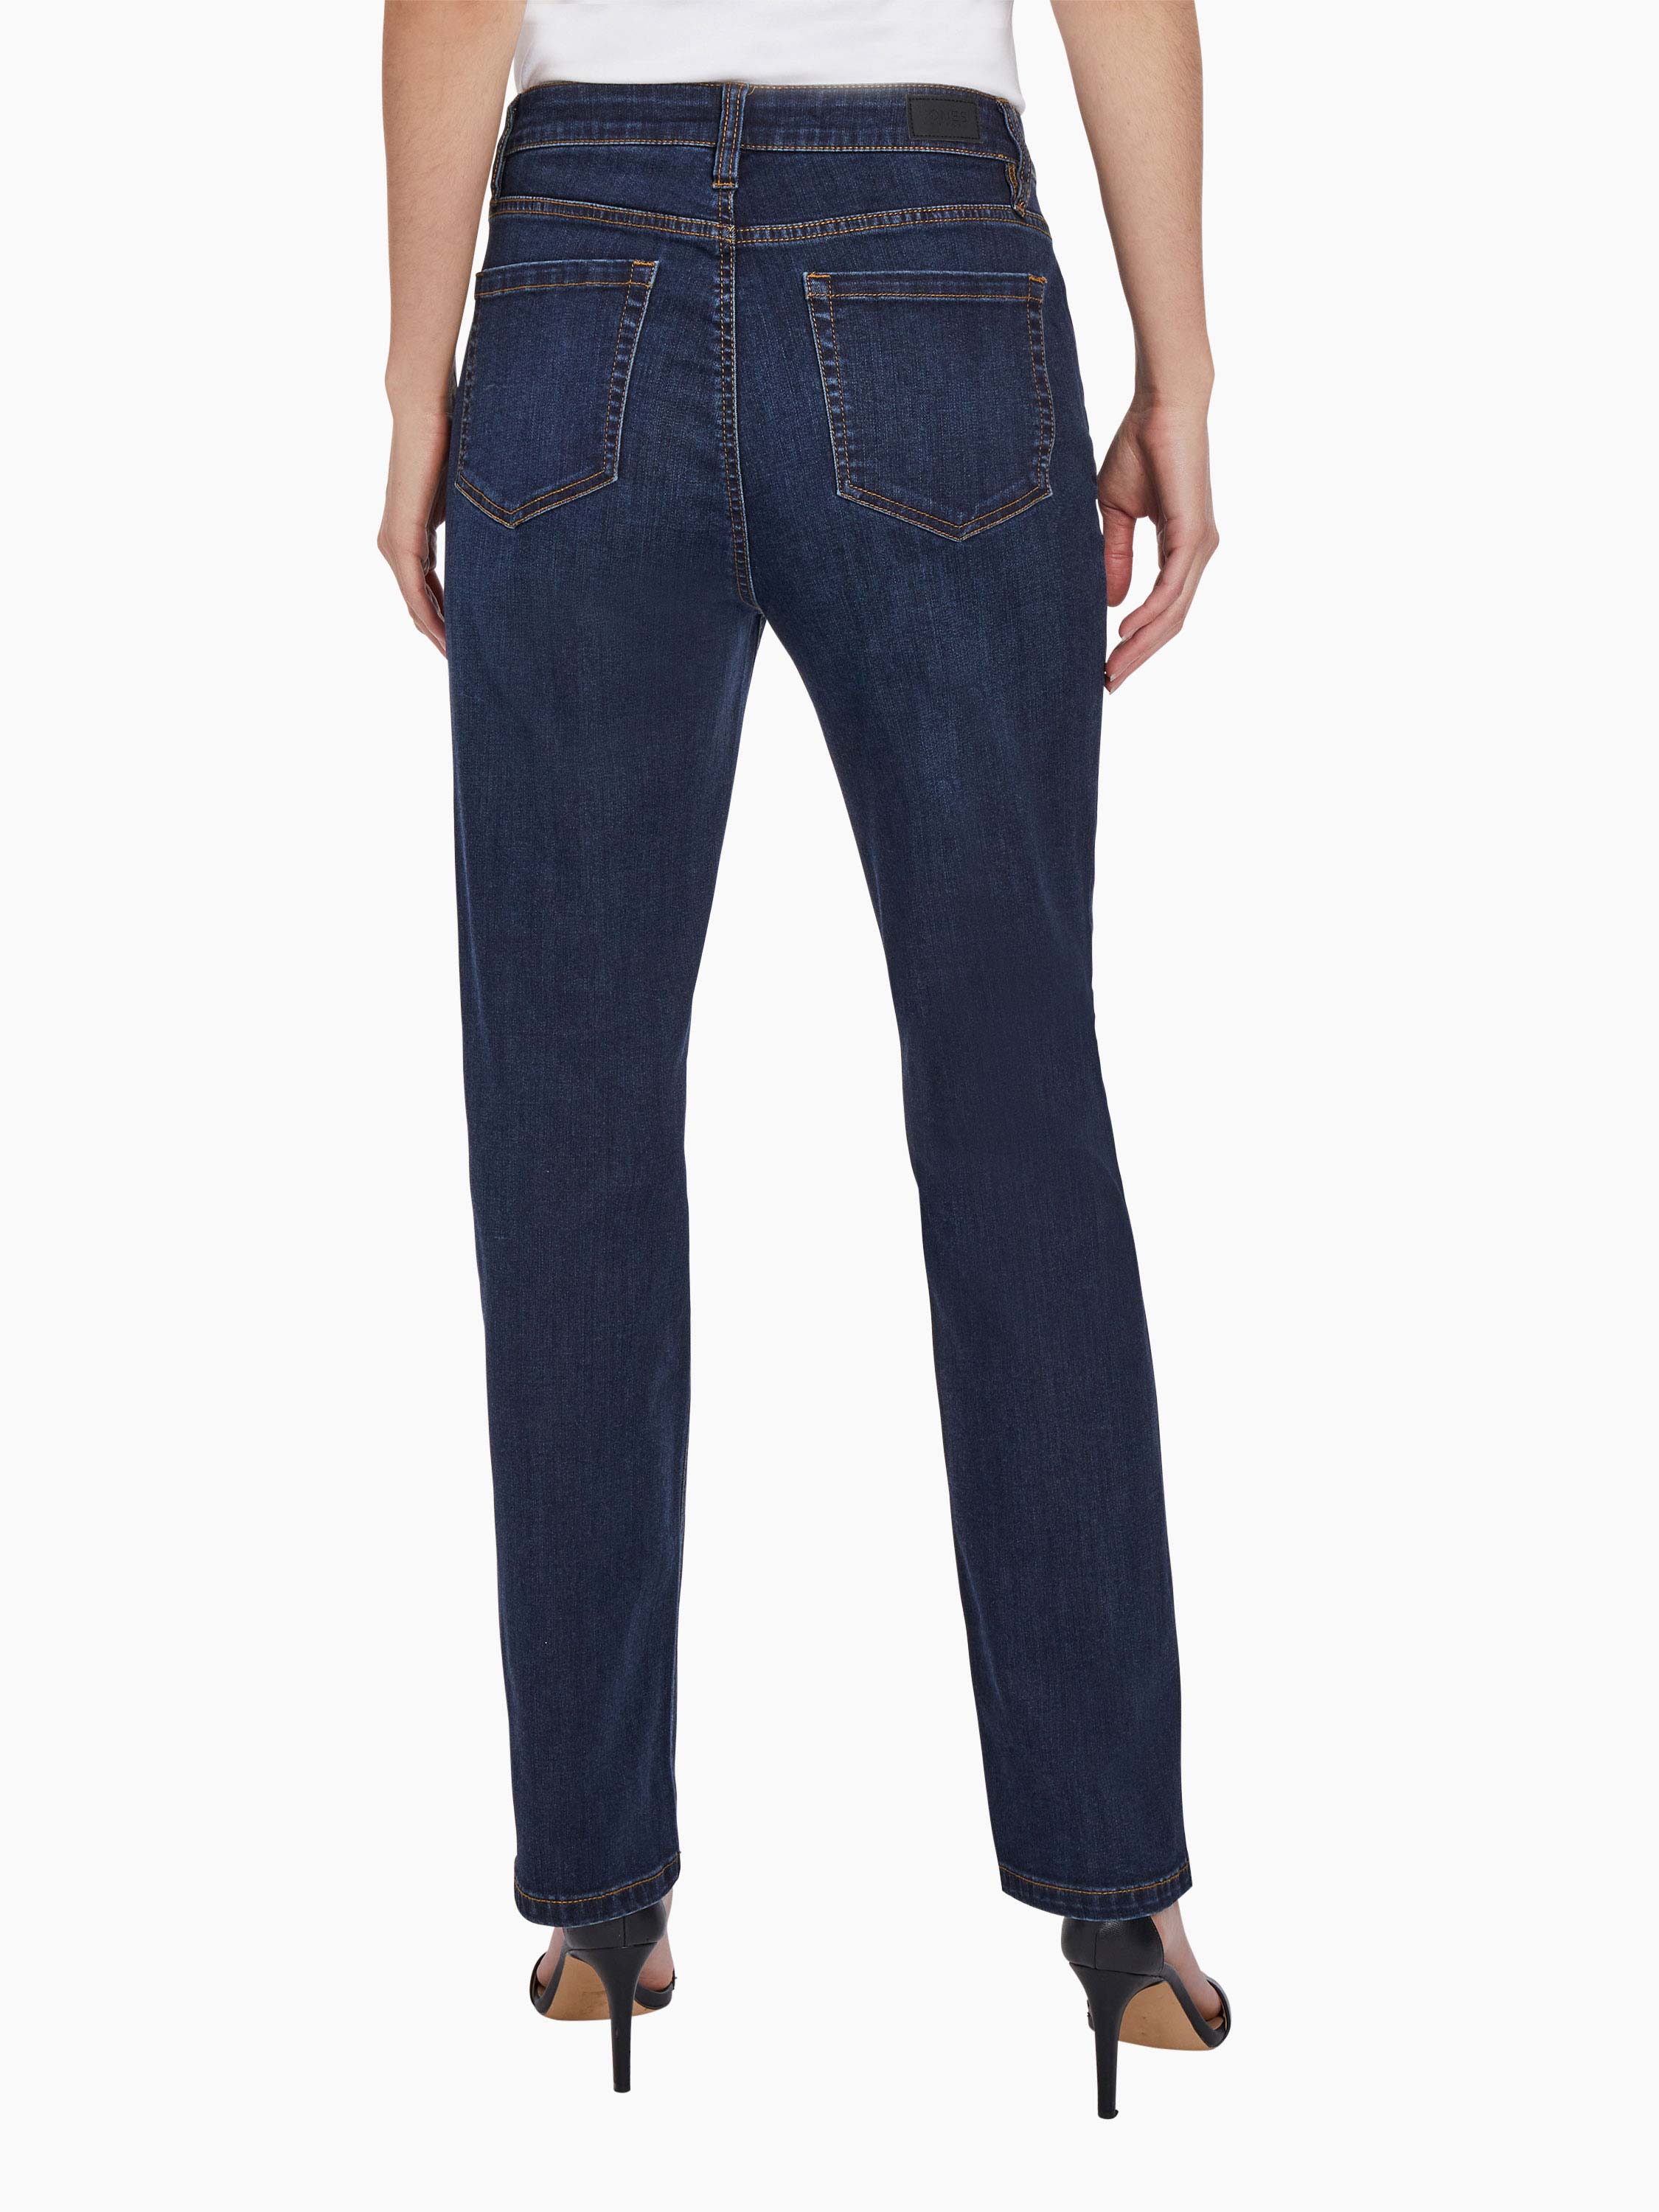 jones new york lexington jeans